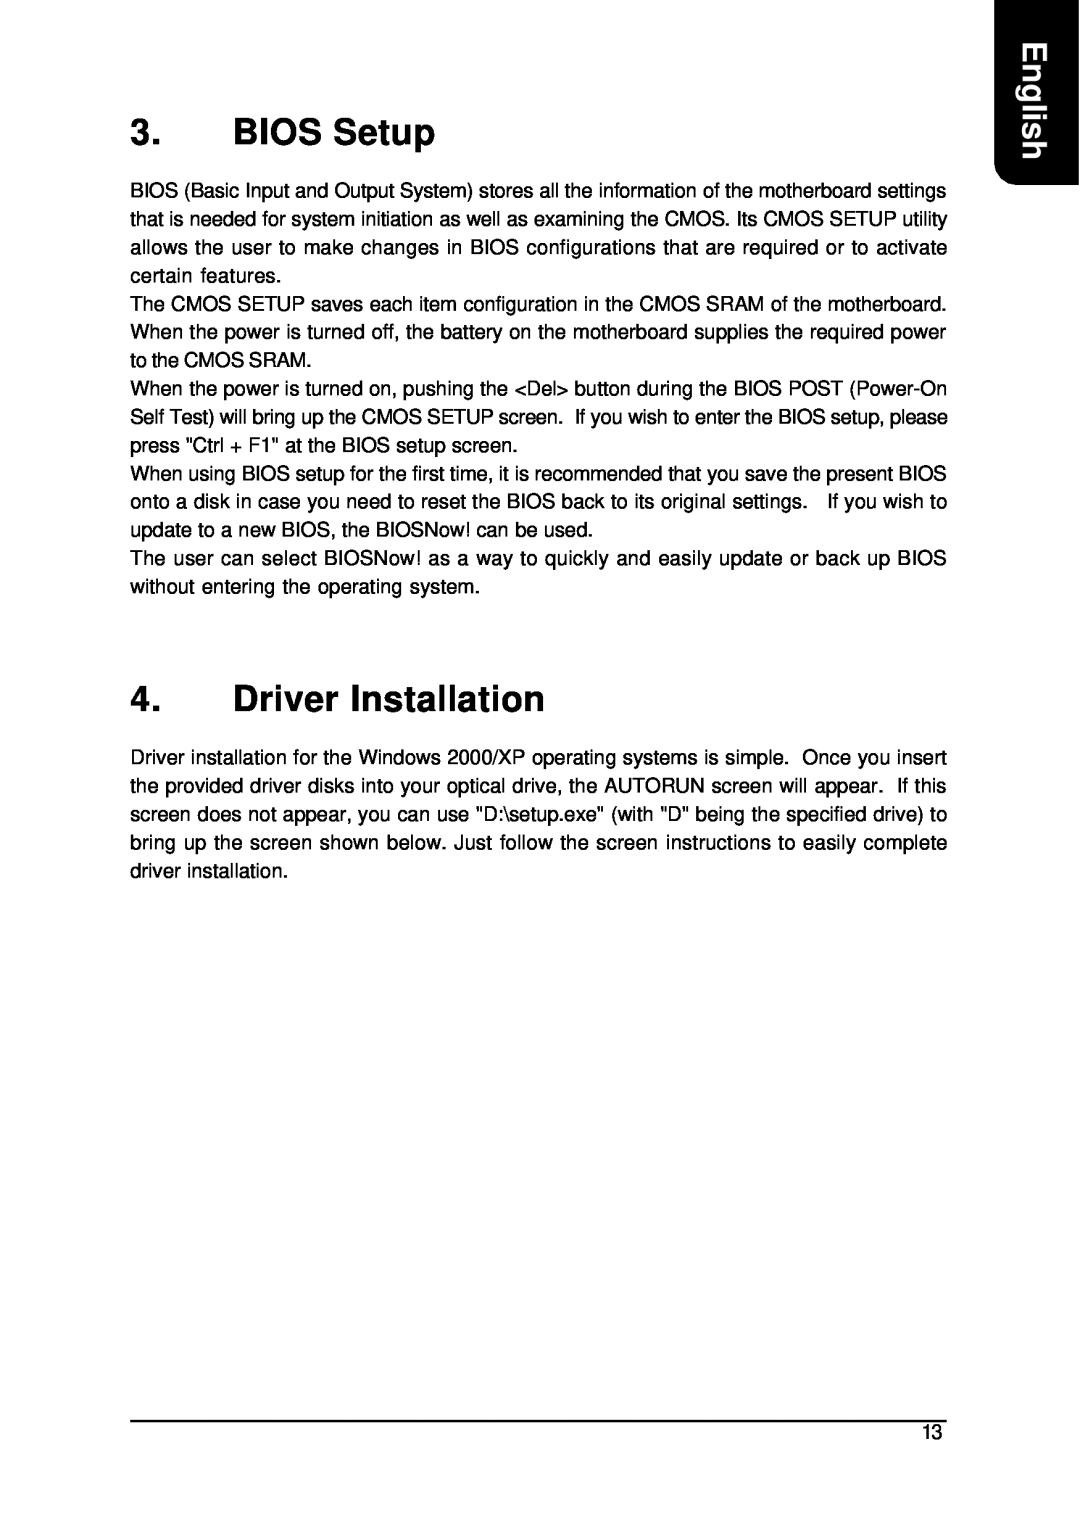 Intel XP-M5S661GX user manual BIOS Setup, Driver Installation, English 